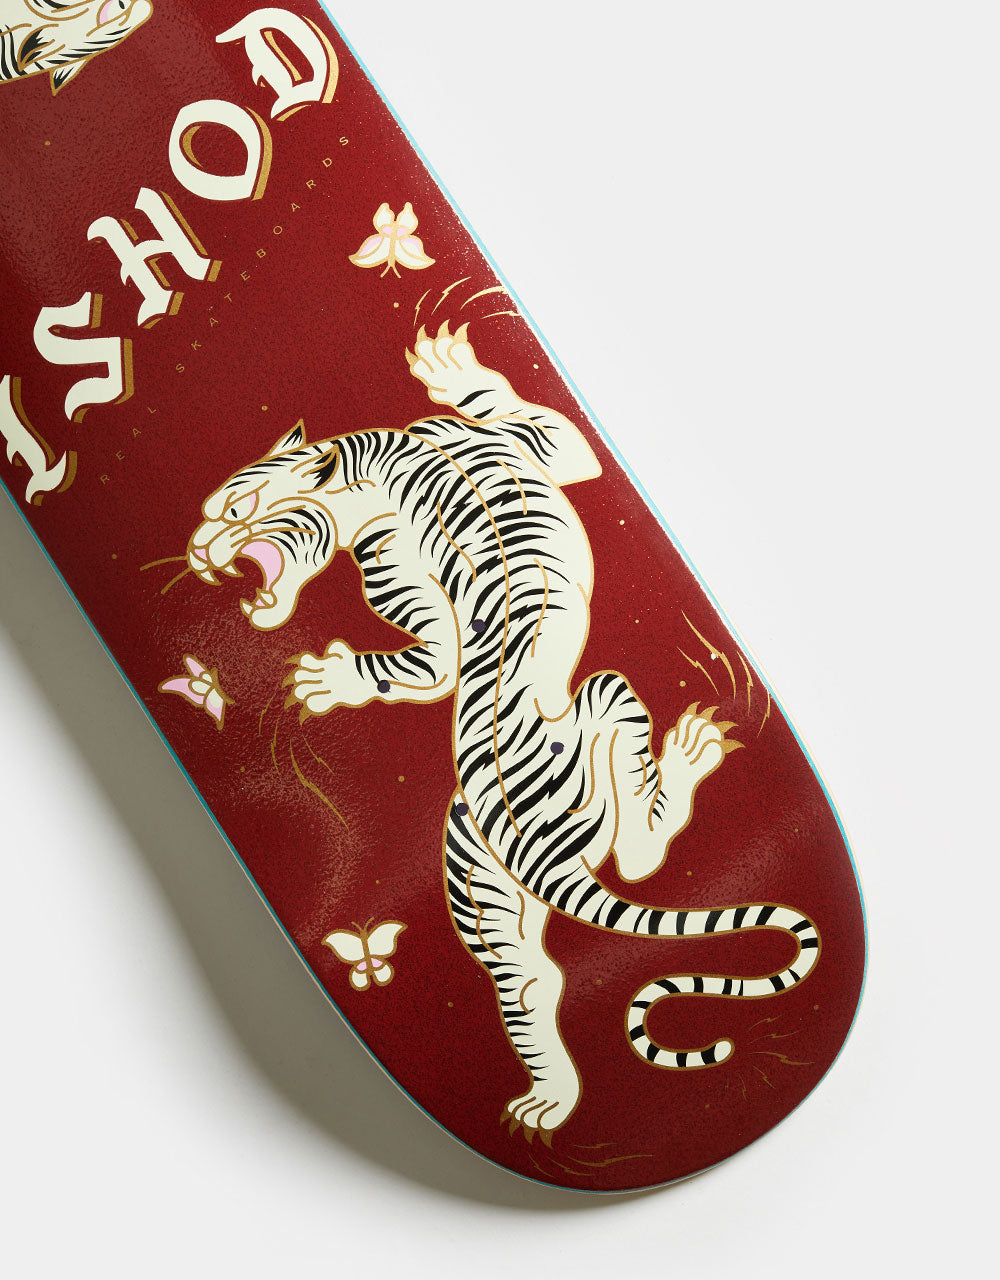 Real Ishod Cat Scratch Glitter 'TWIN TAIL' Skateboard Deck - 8"